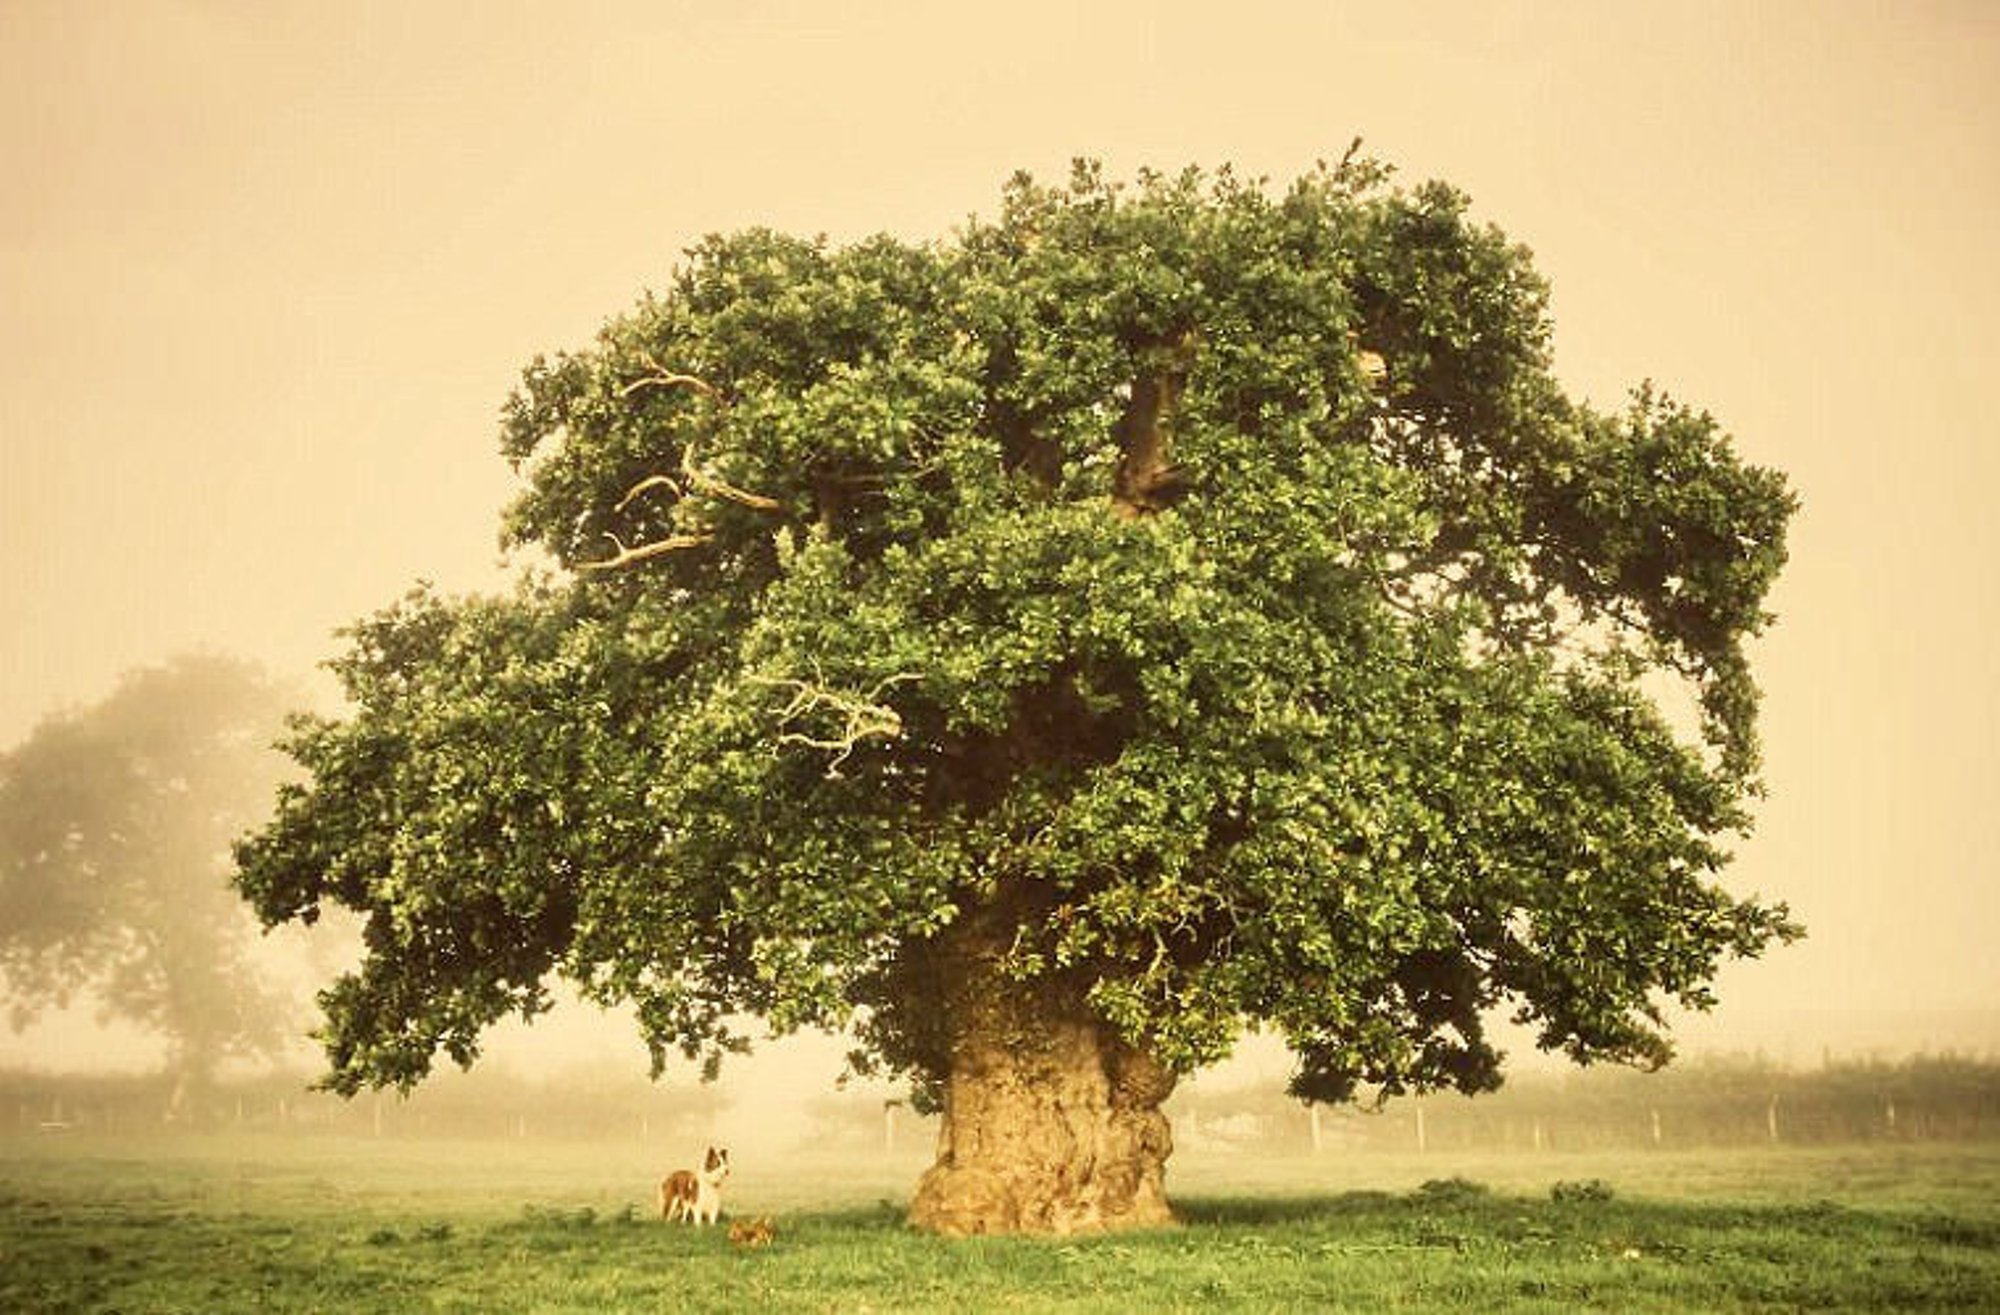 Дерево гуд. Дуб парк Фредвилл, Нонингтон, Великобритания. Раскидистая крона дуб. Дуб дерево. Красивое дерево.